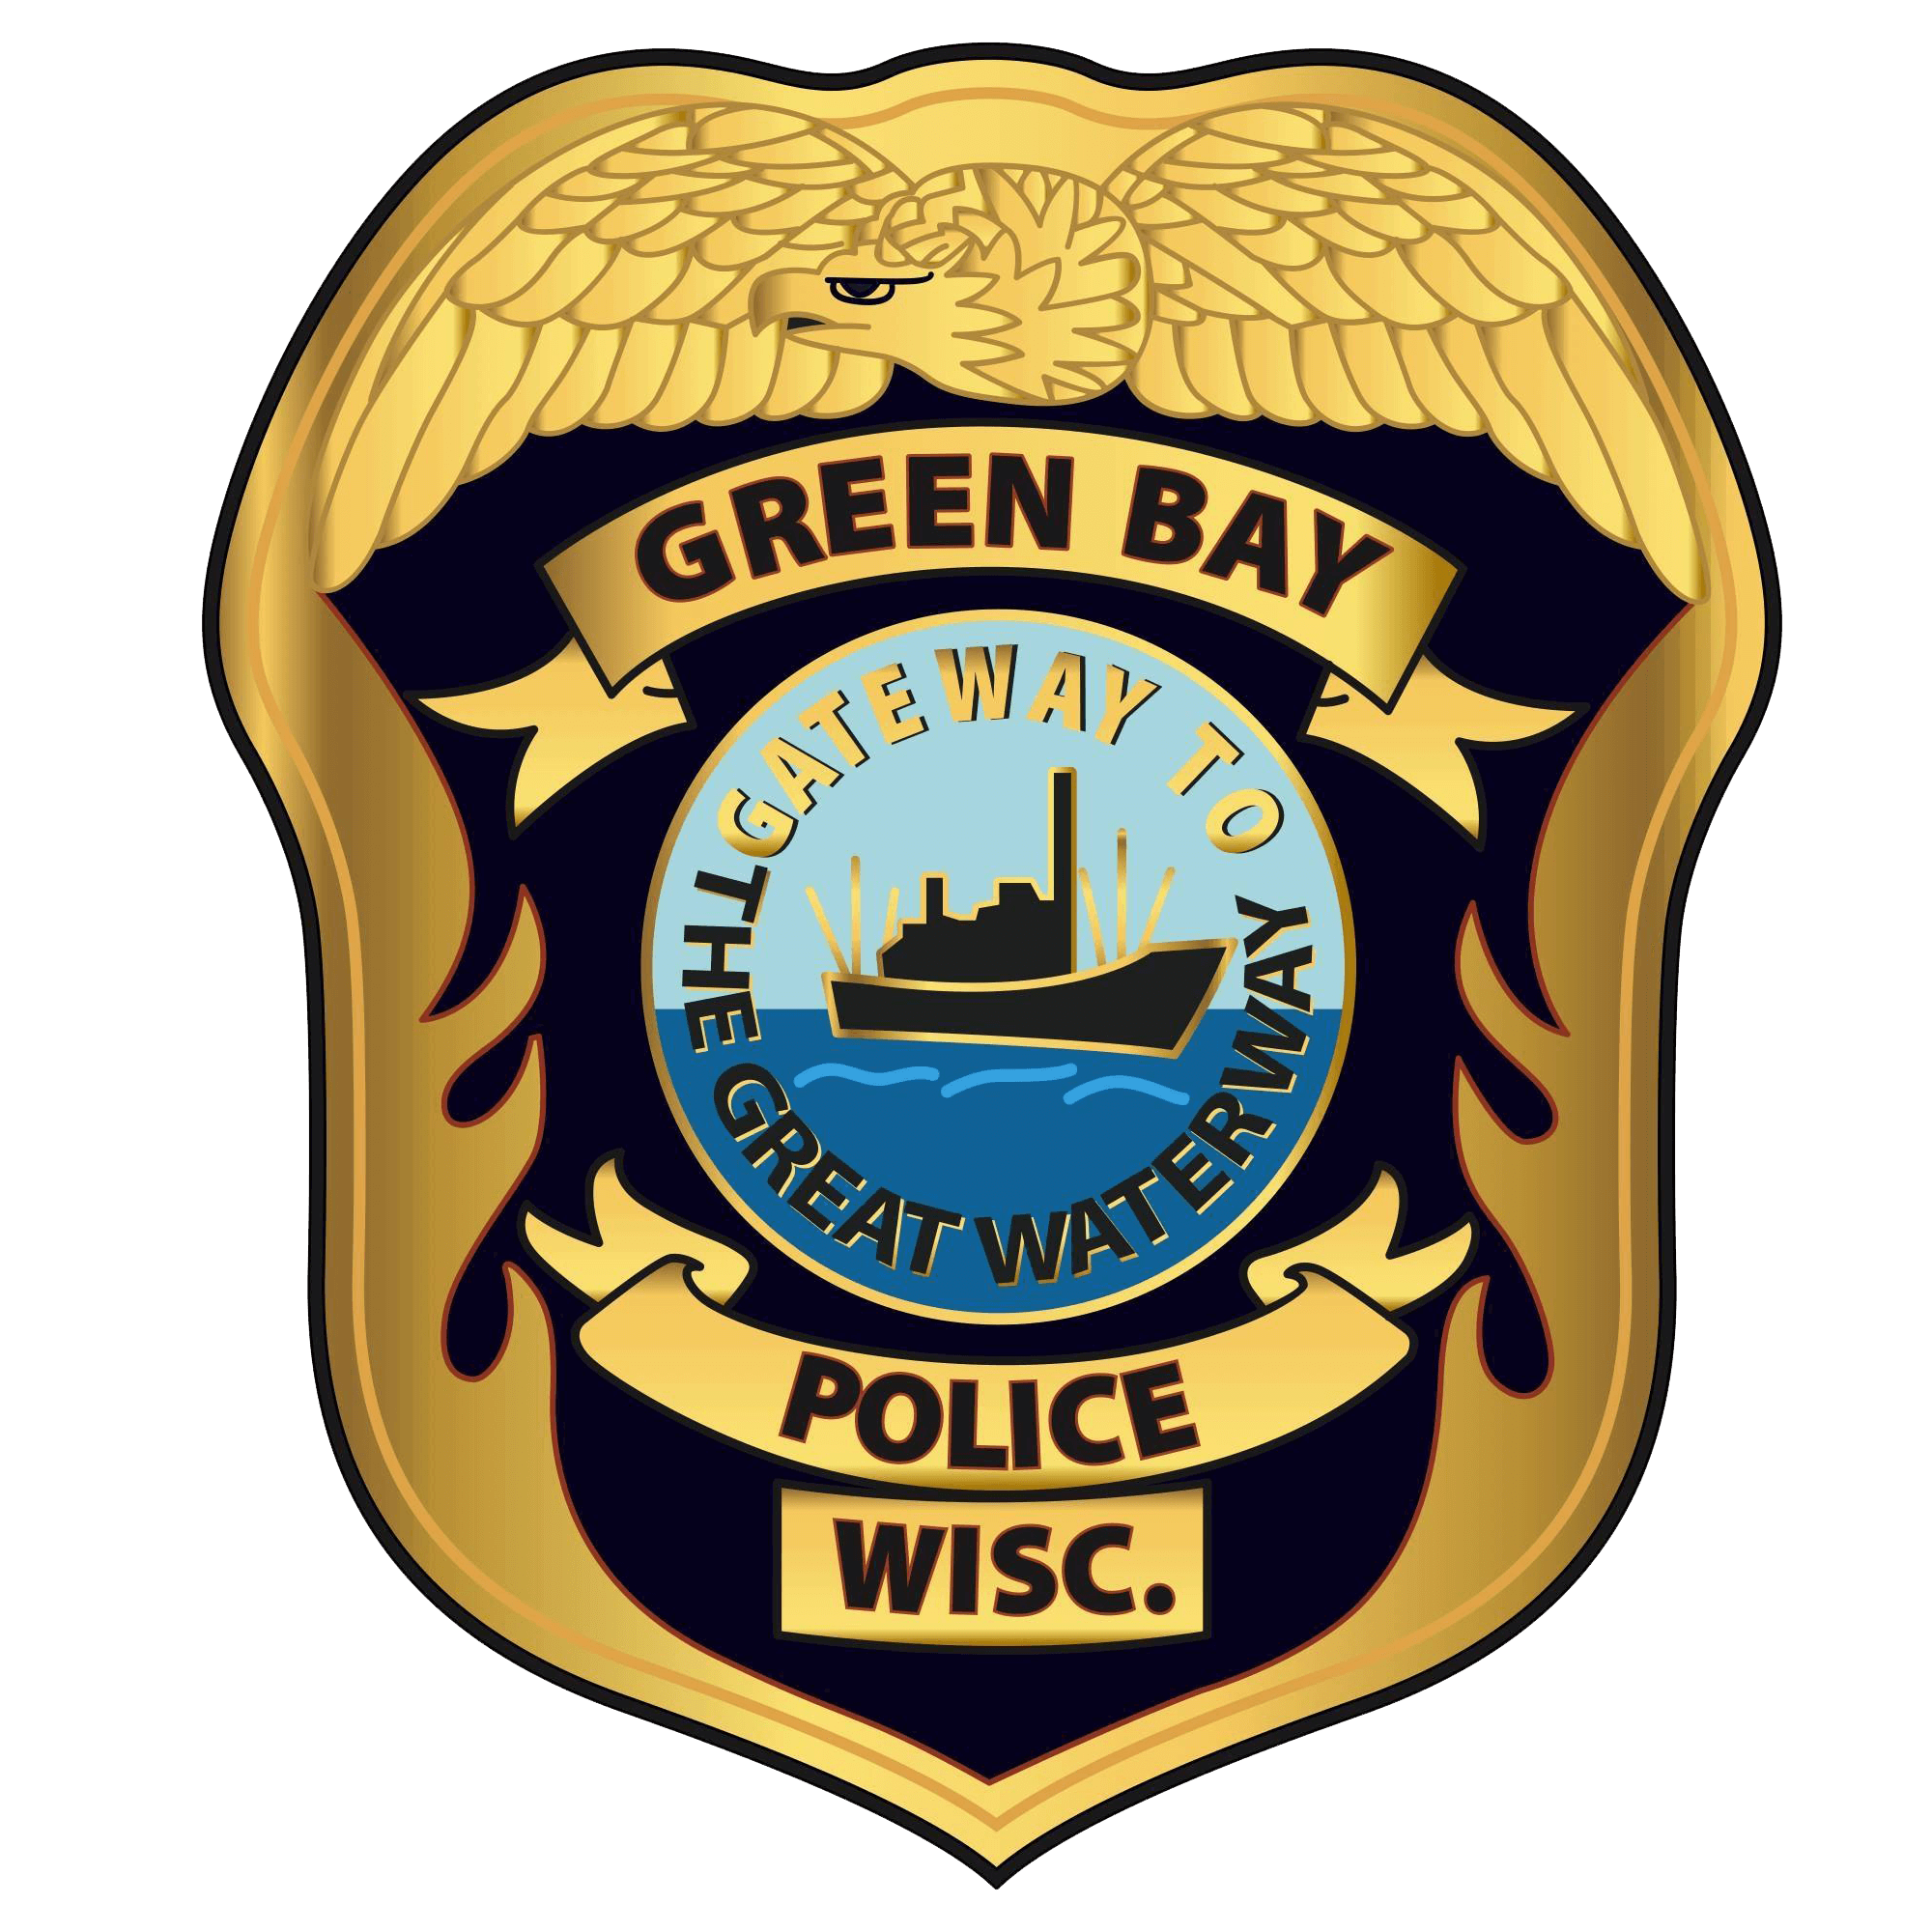 Green Bay Police Department logo.